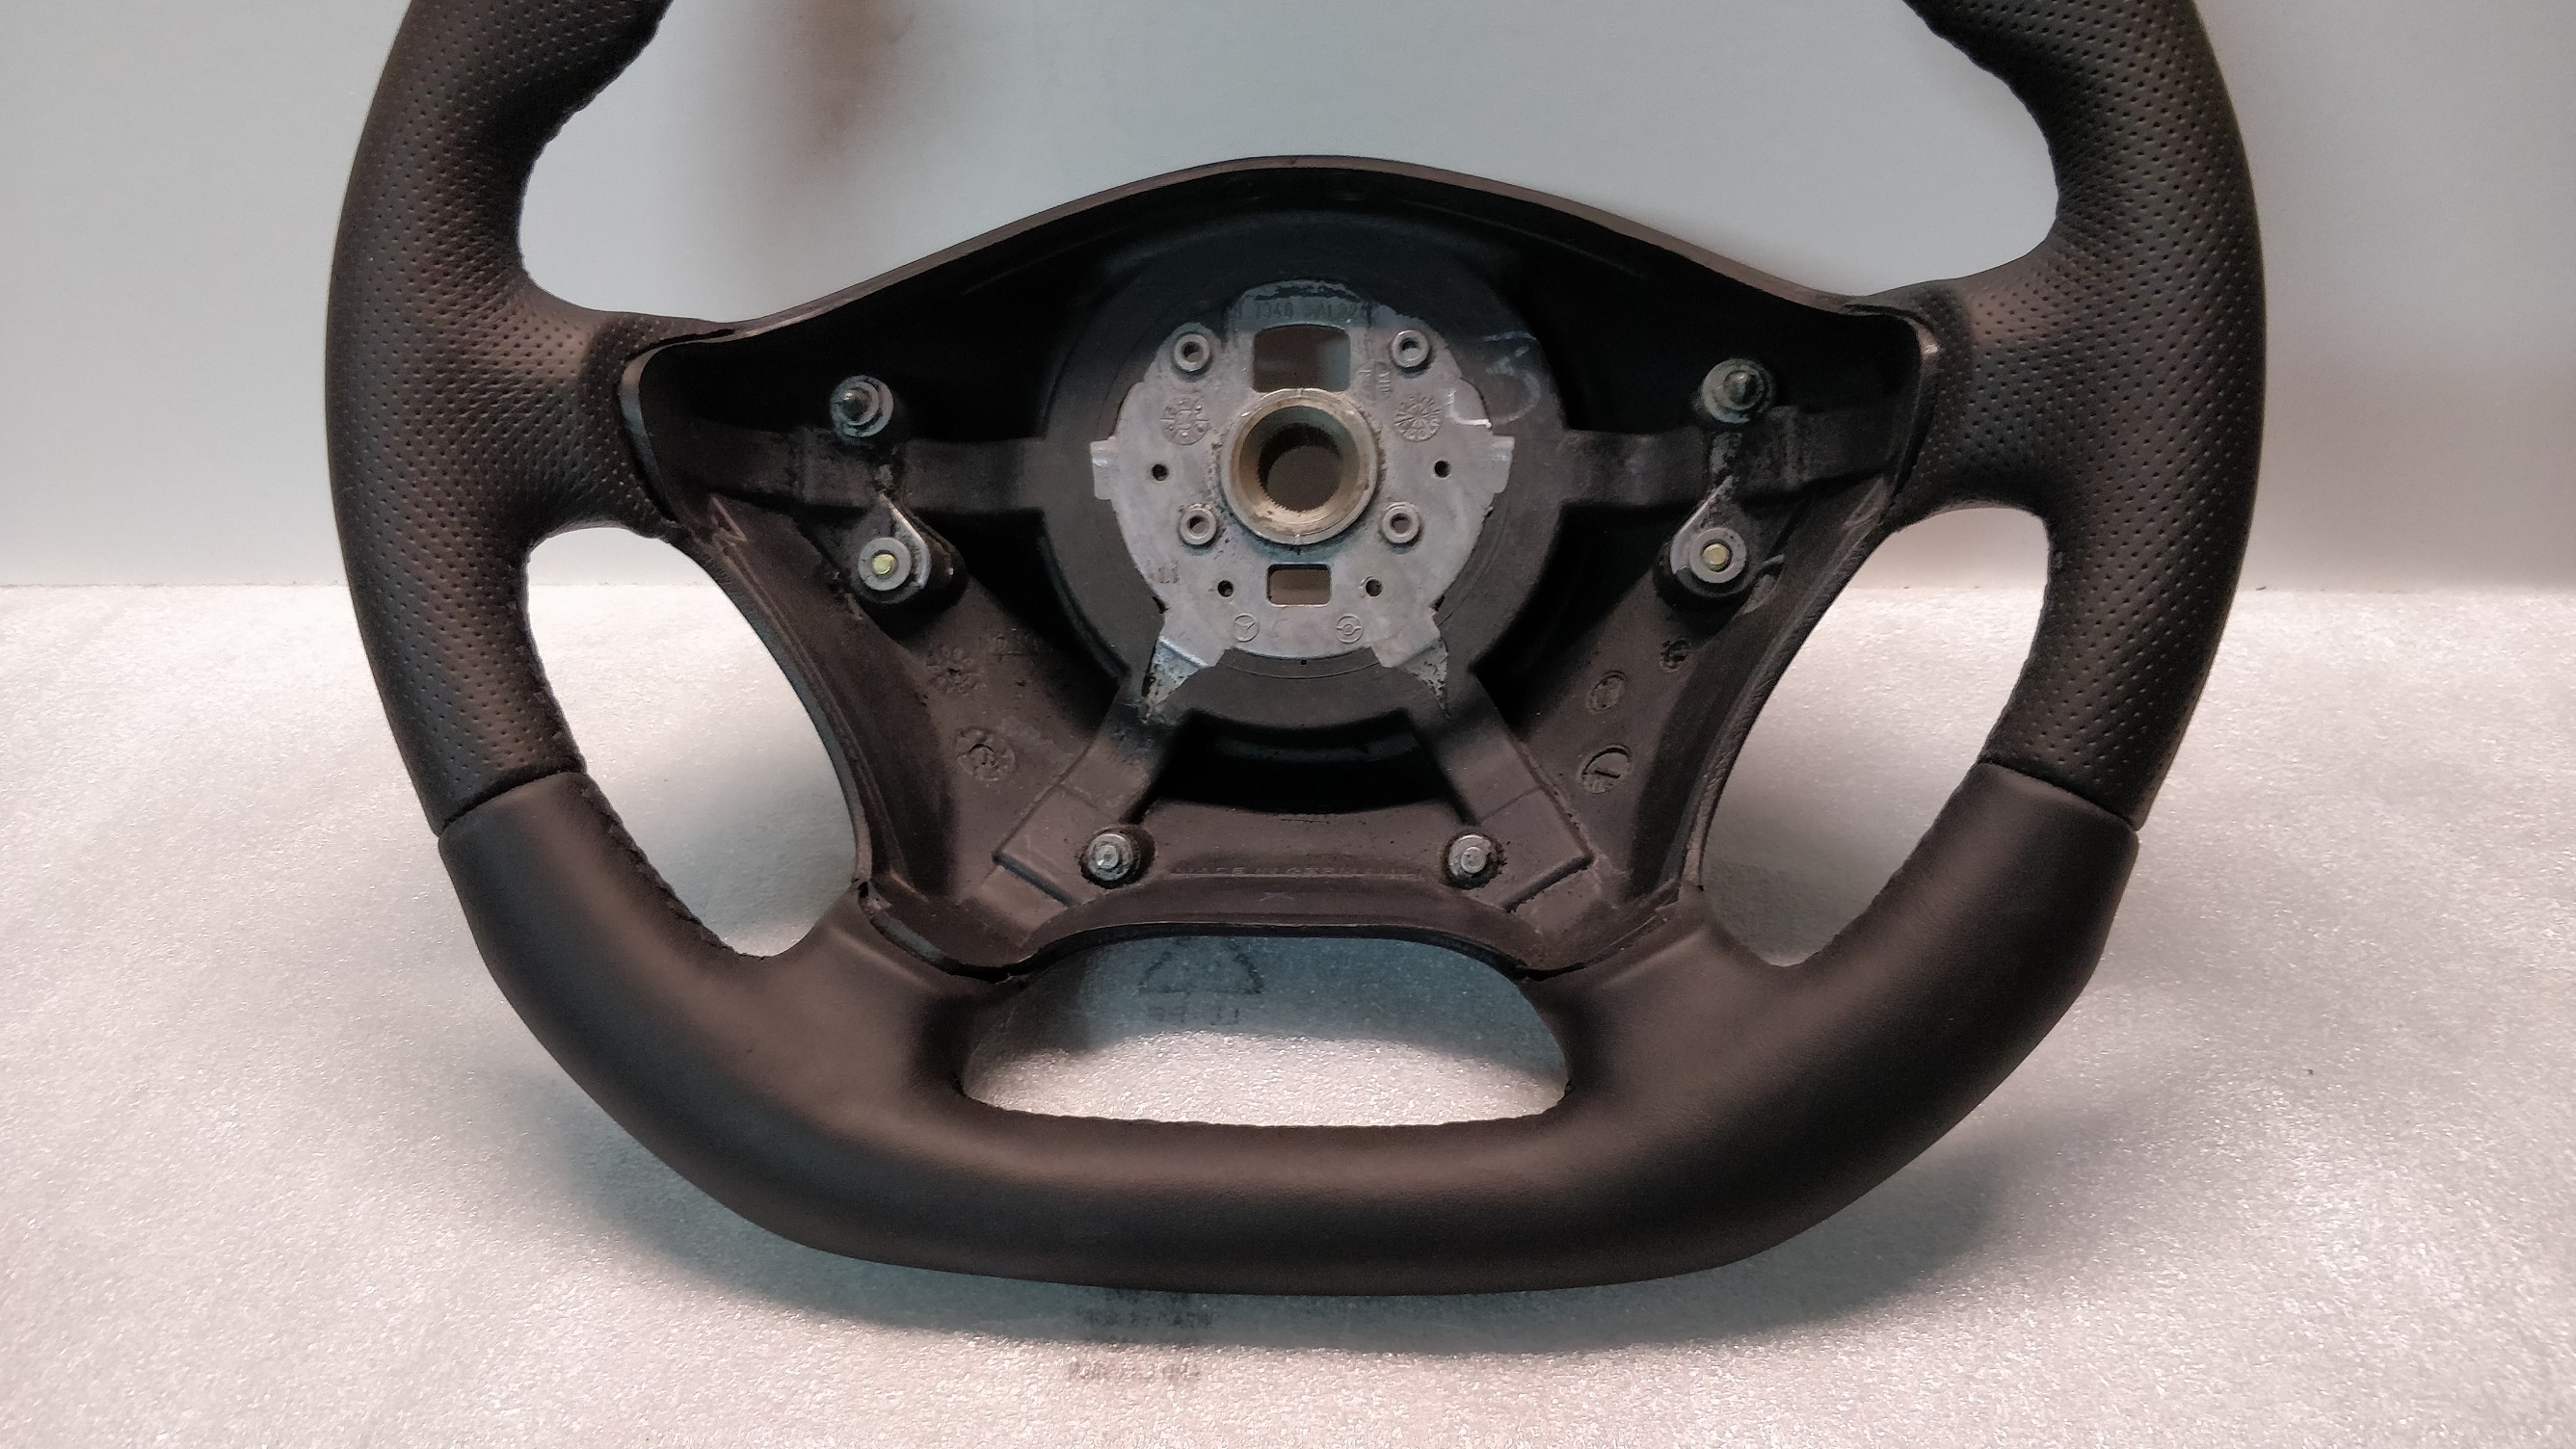 Vito W639 steering wheel leather custom flat bottom A6394640001 2003-2010 thumb rests